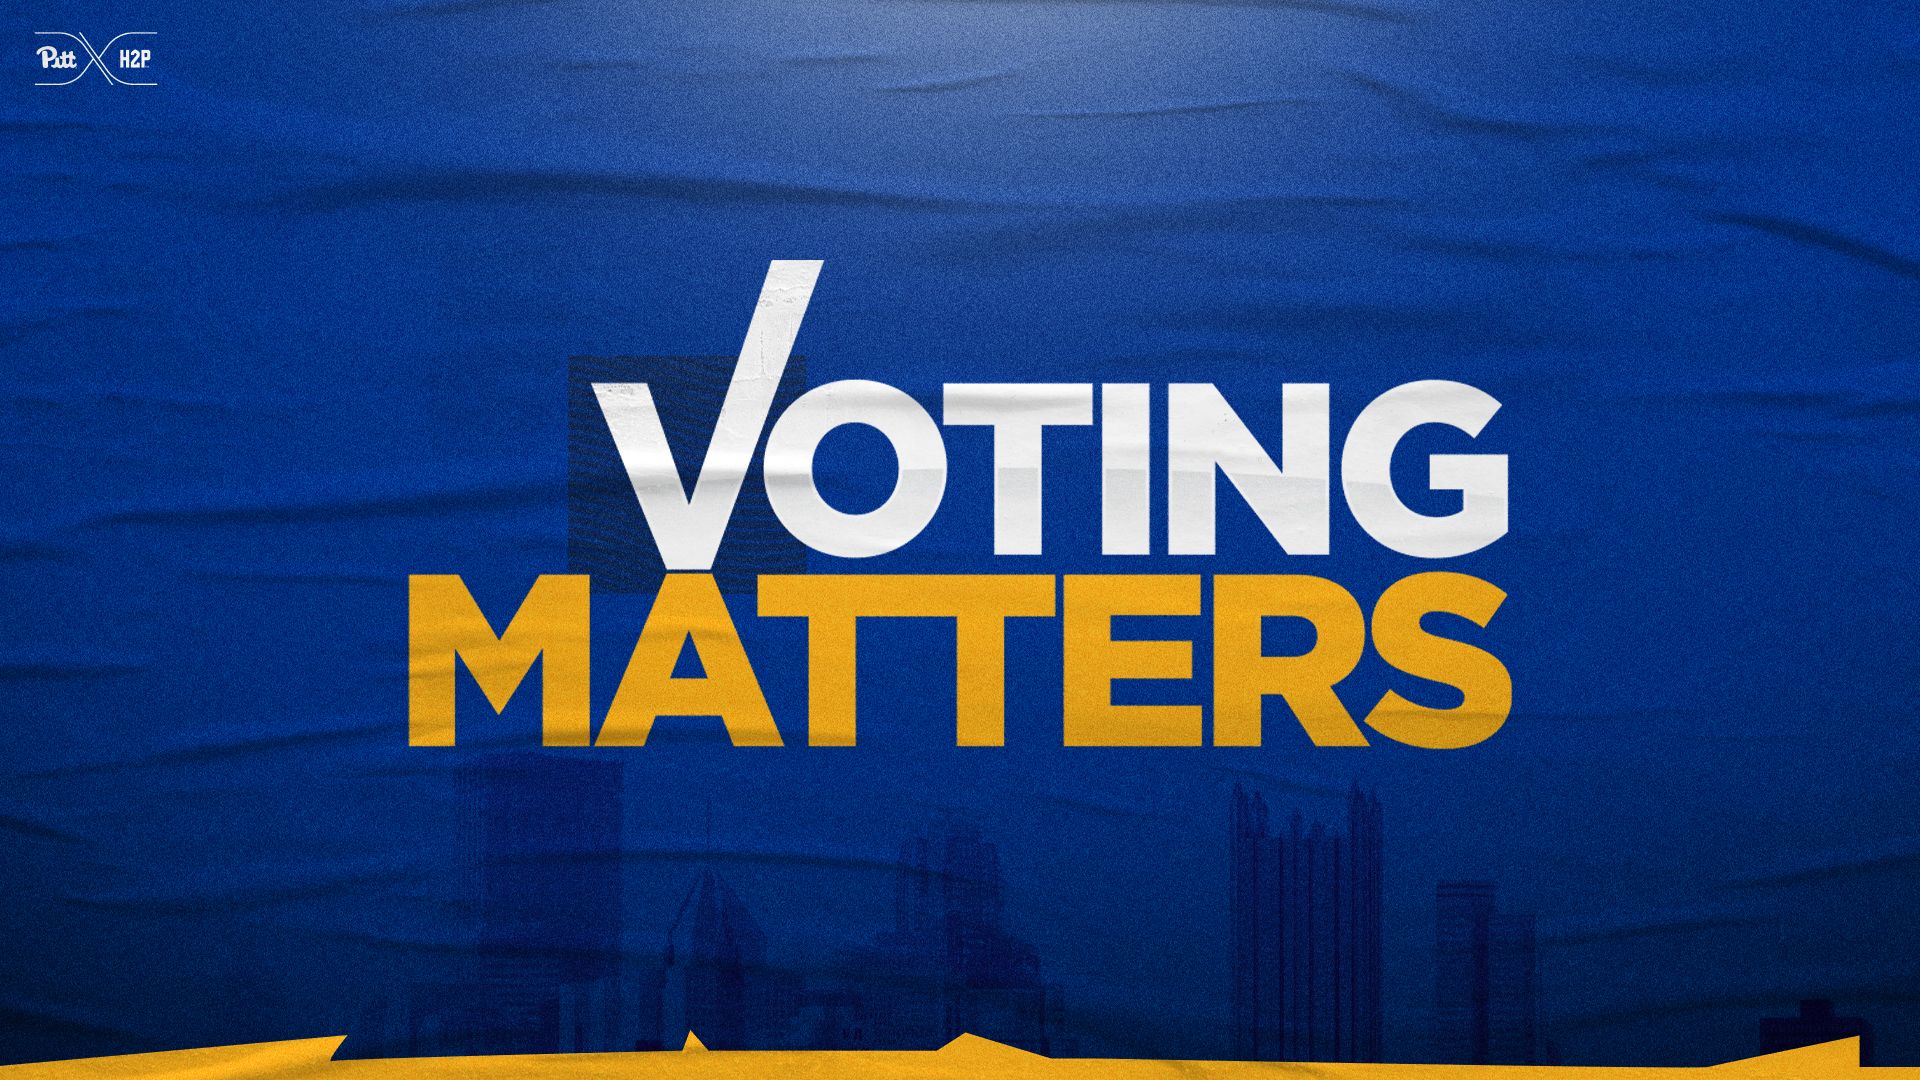 Pitt Athletics Introduces Voting Matters Campaign Panthers #H2P